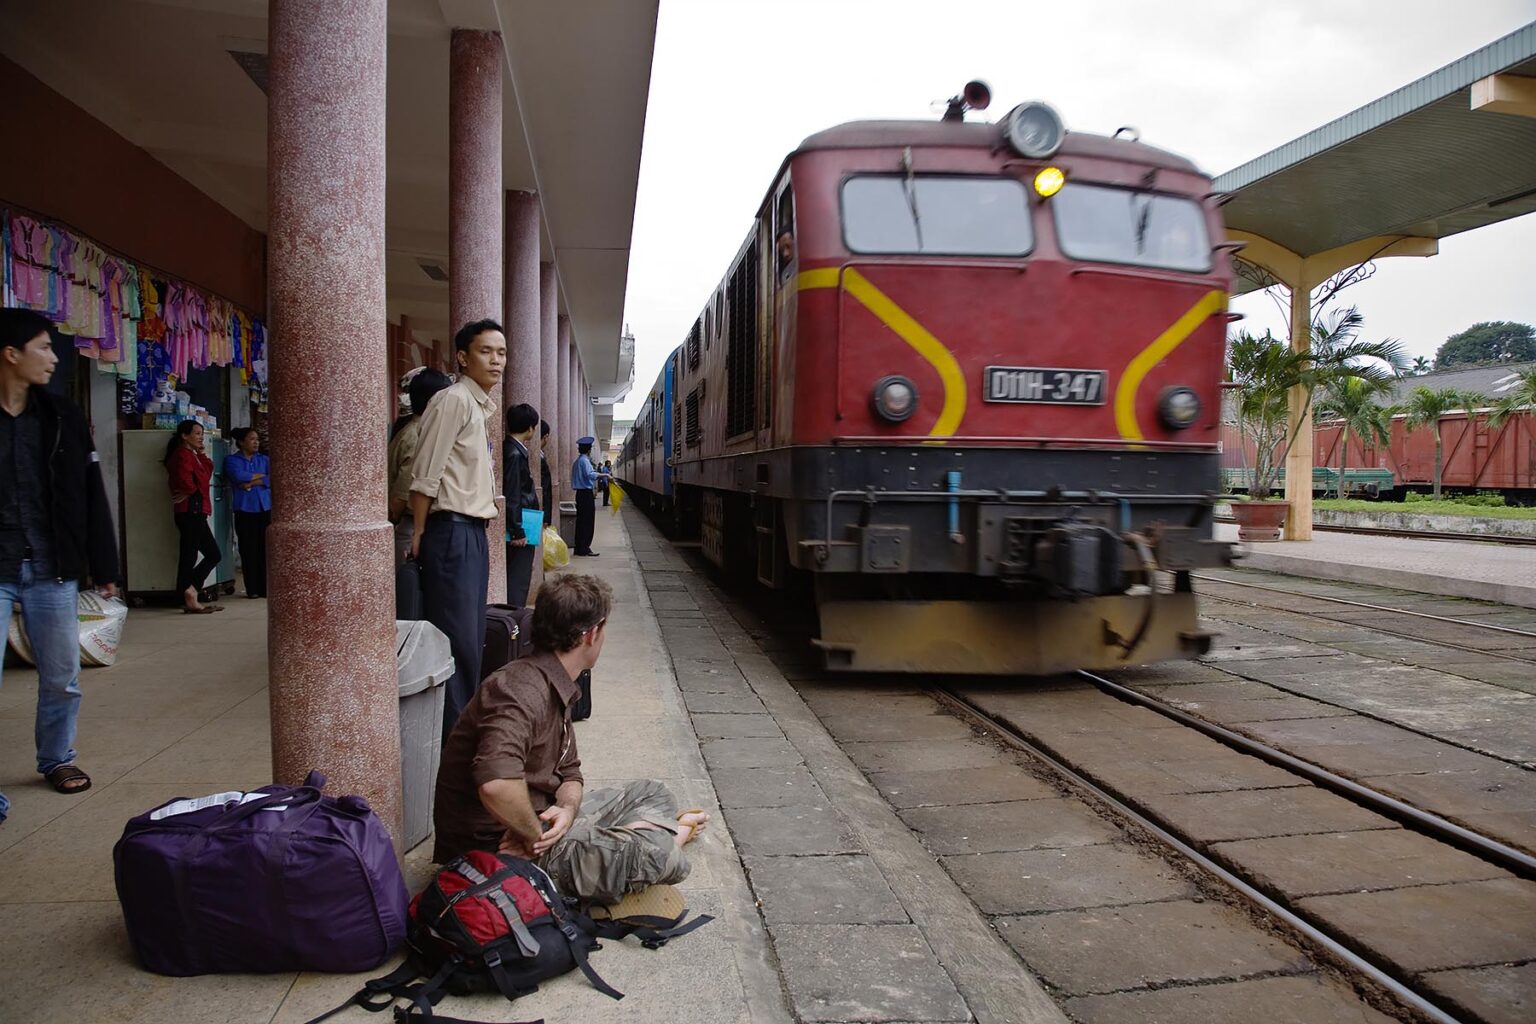 A tourist waiting for an arriving train - HUE, VIETNAM